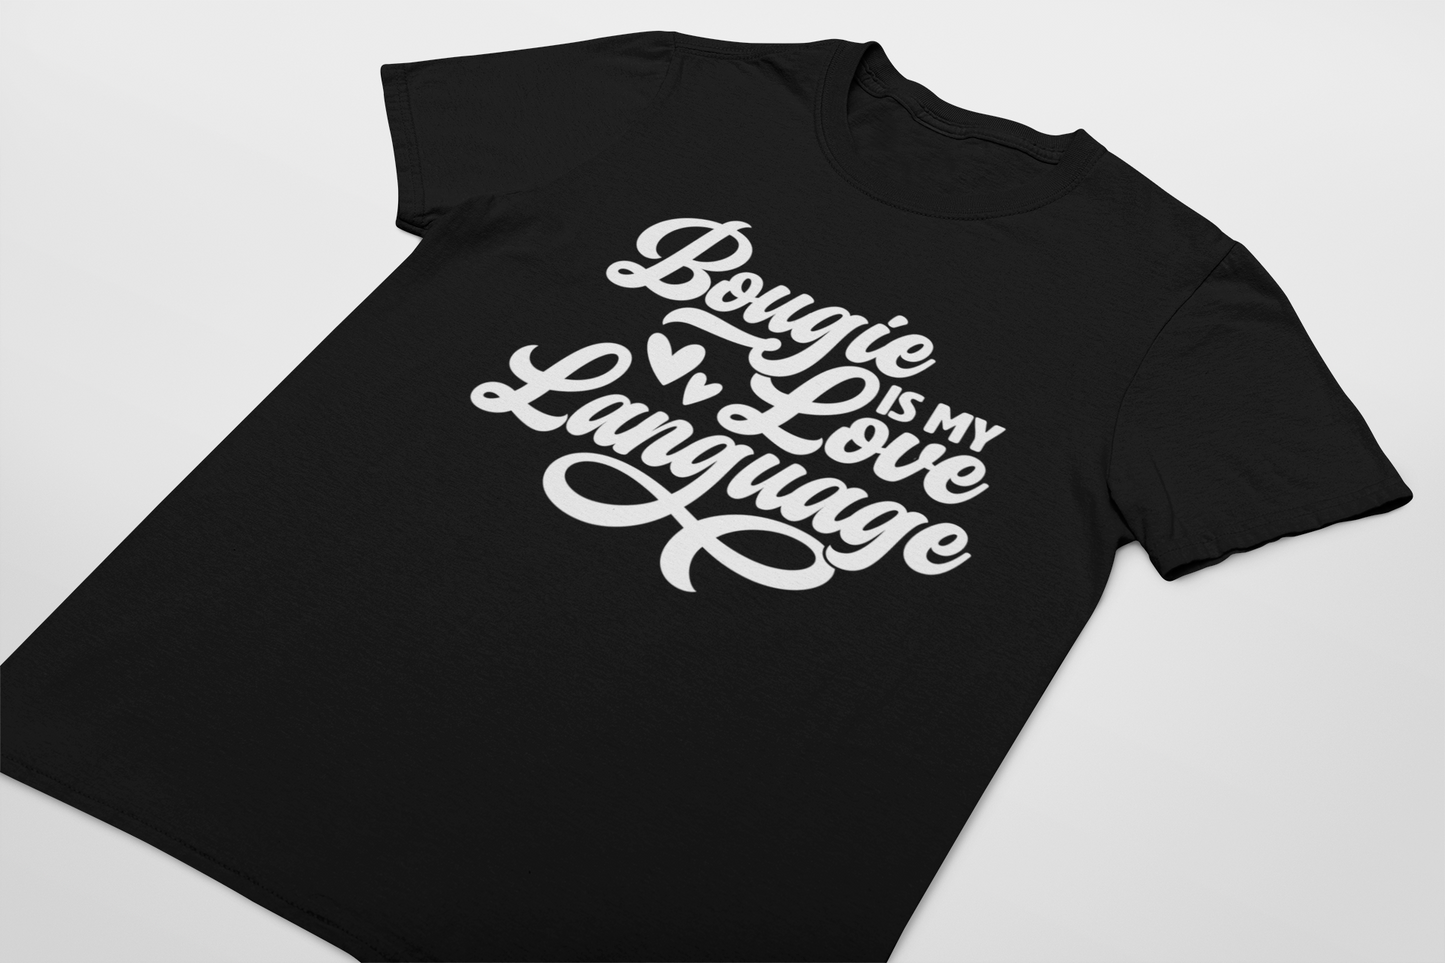 Bougie IS MY Love Language T-shirt